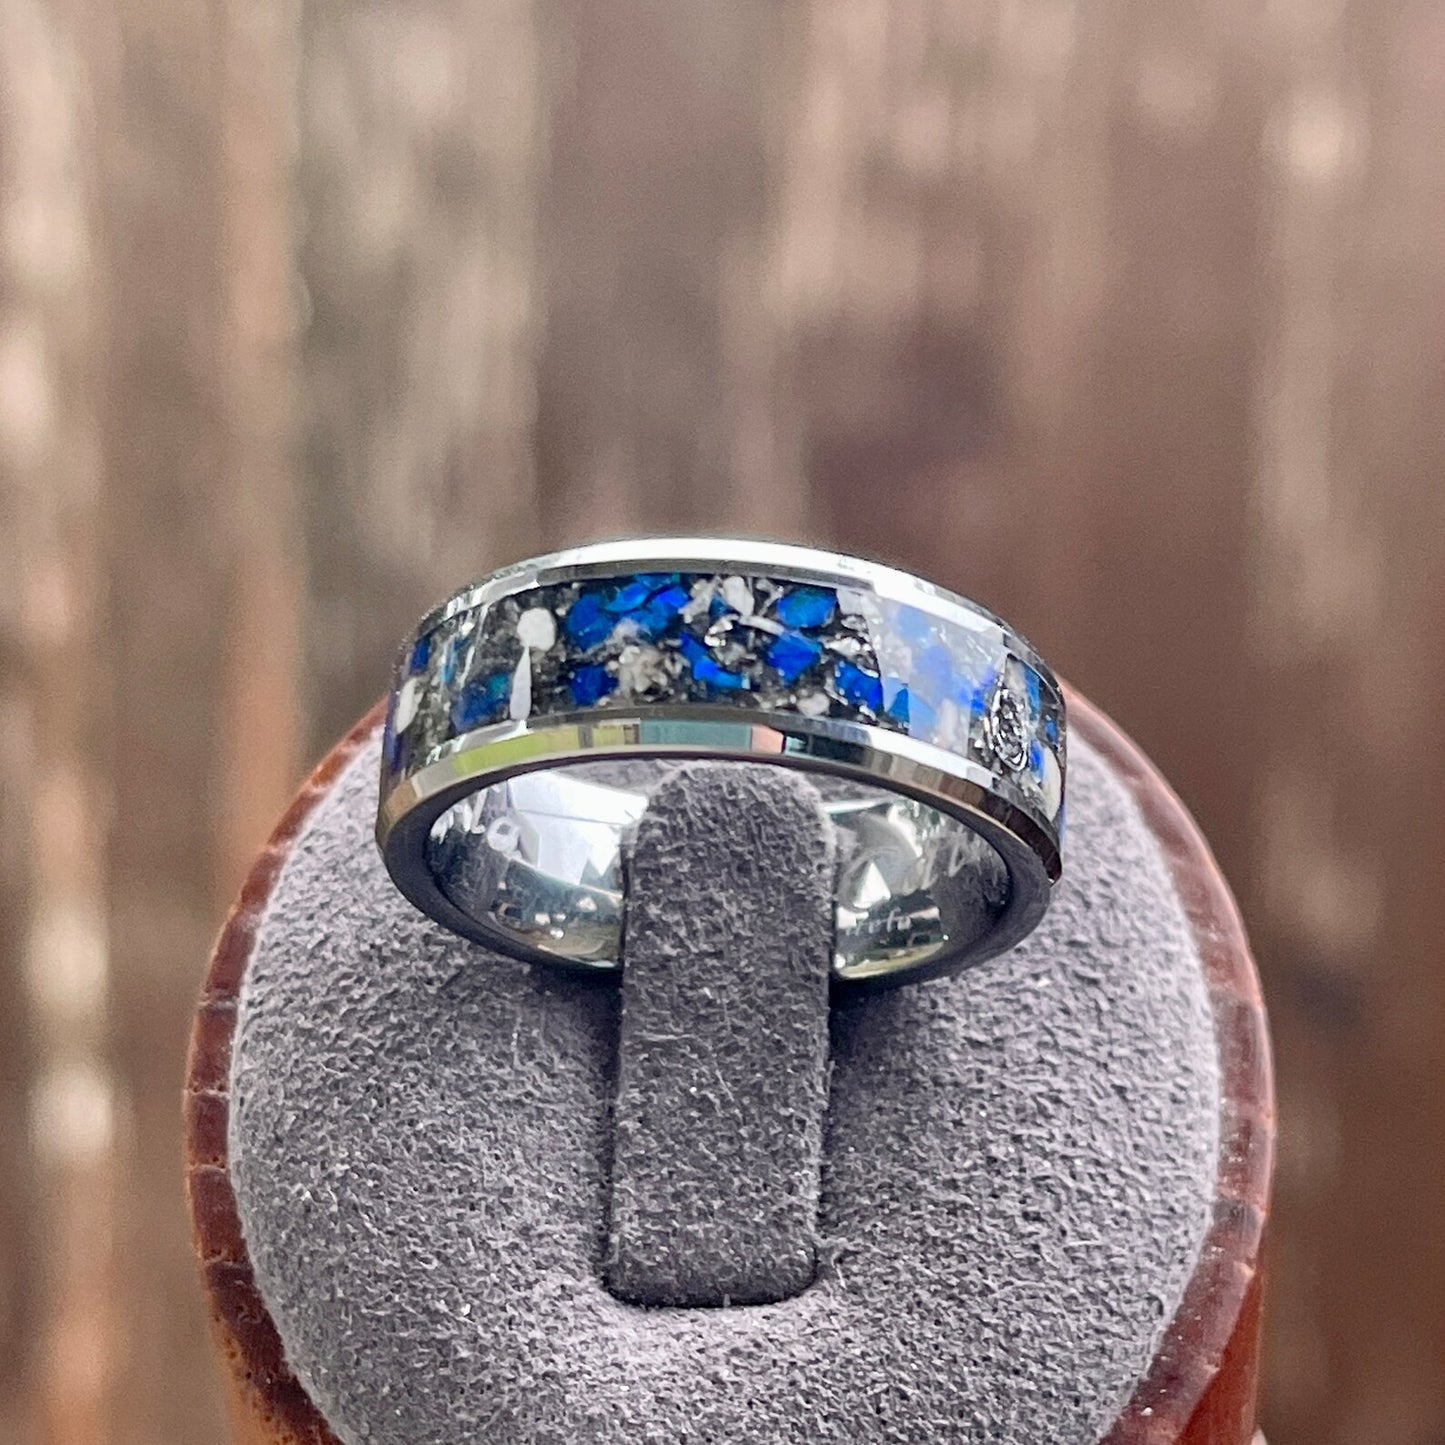 8mm Tungsten Intergalactic Cremation Ring